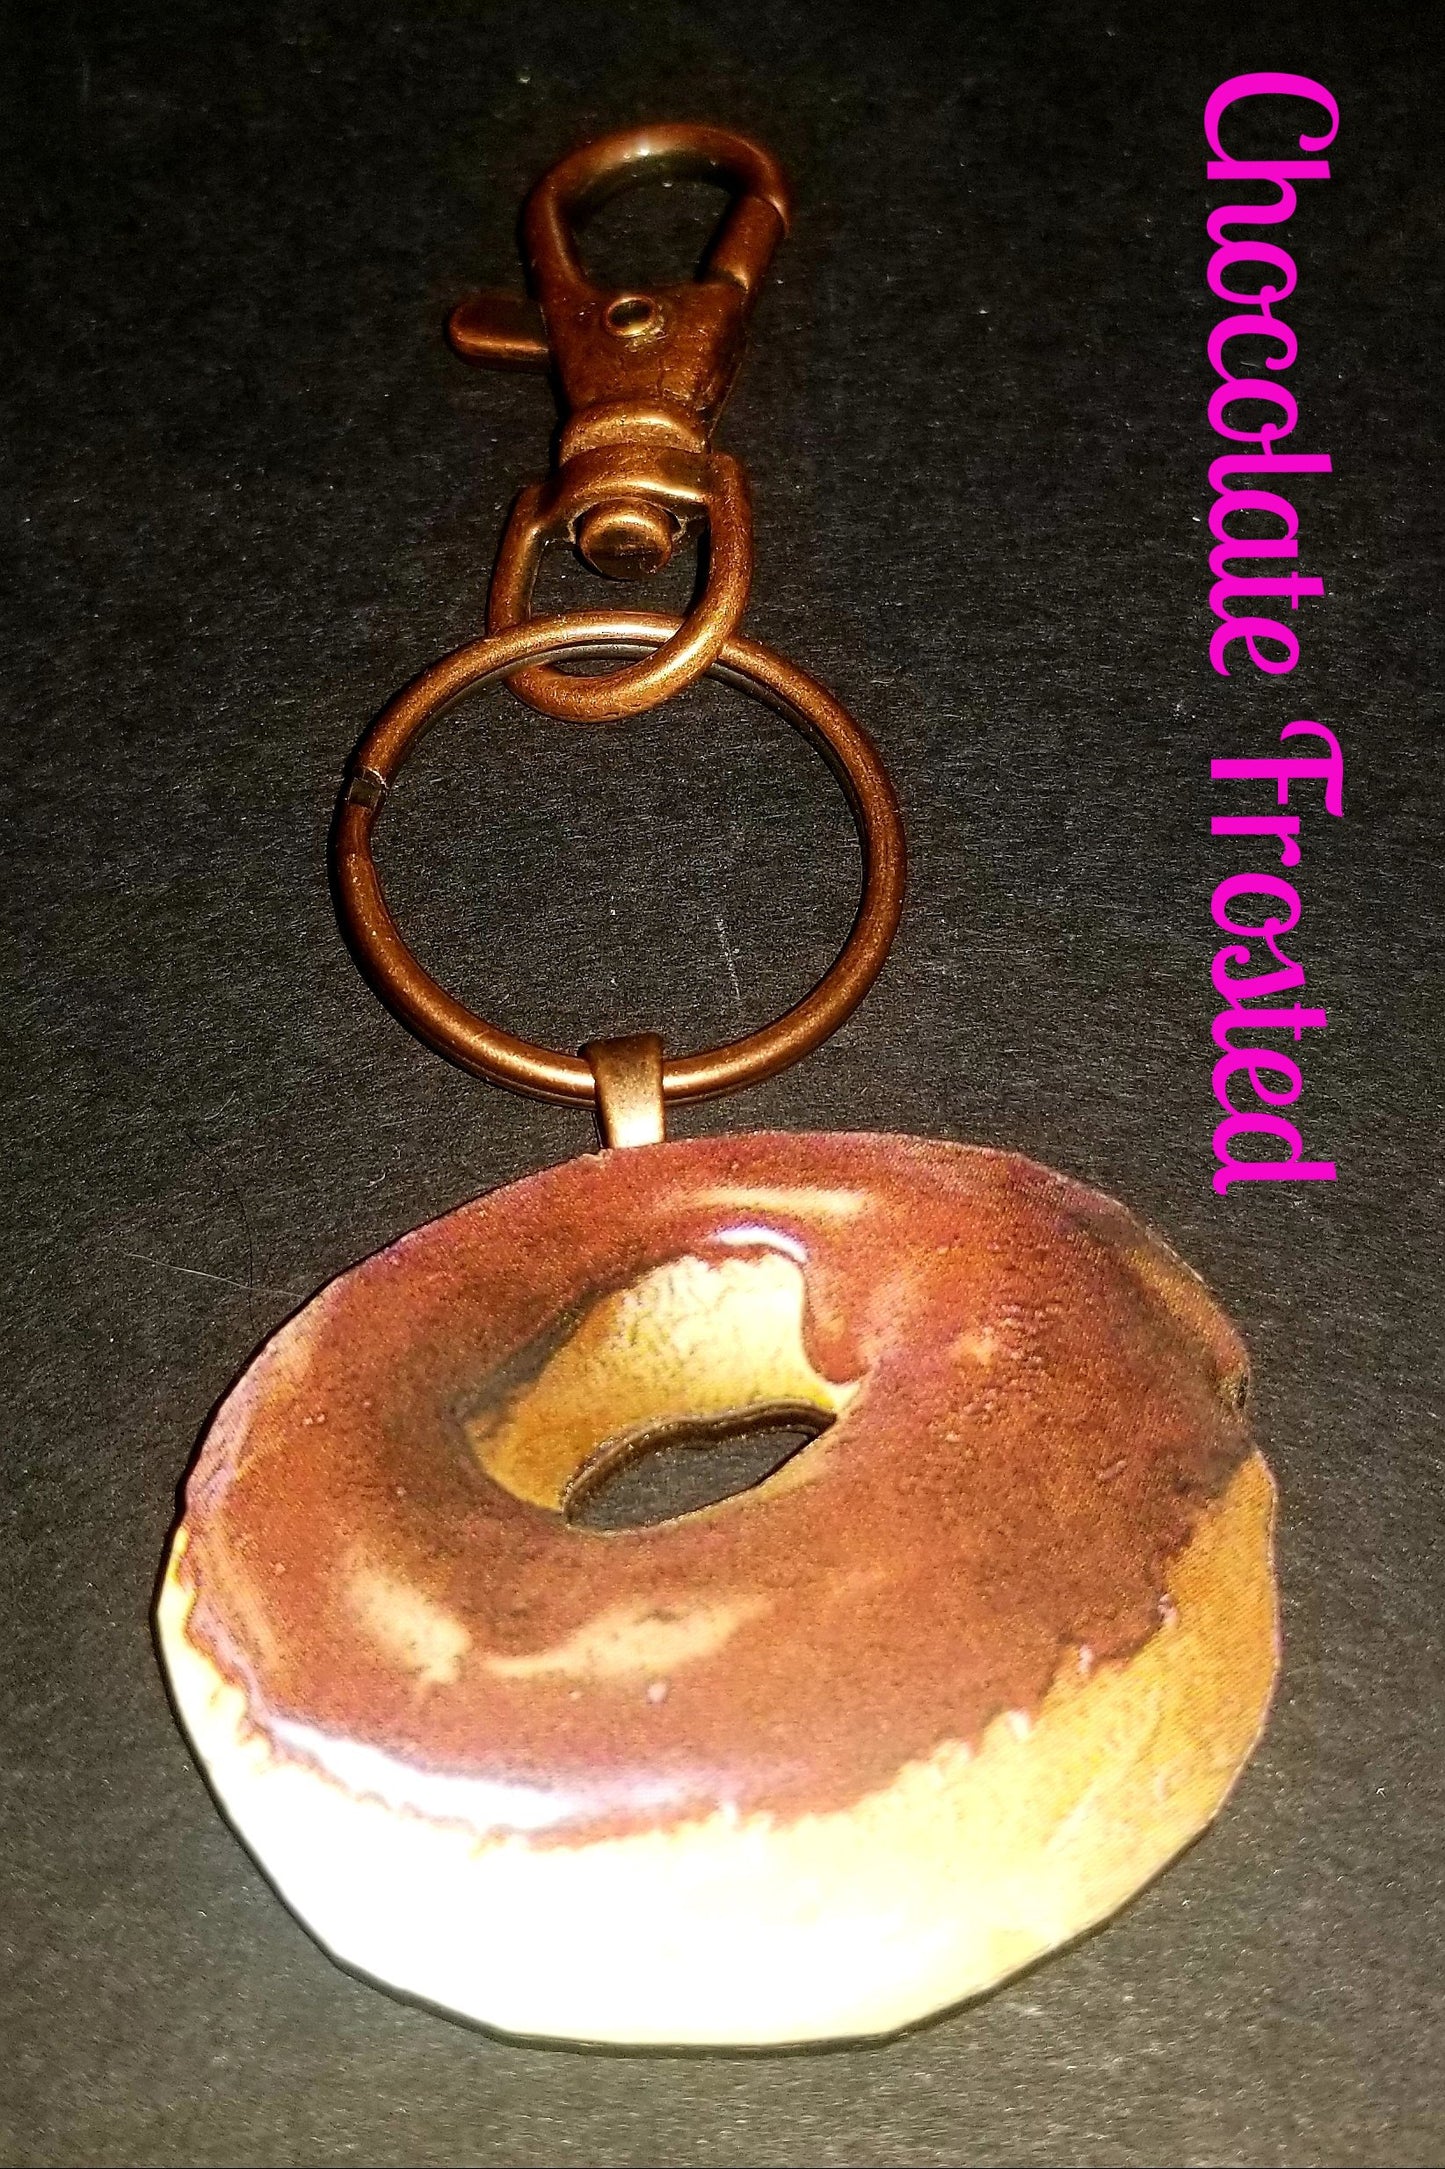 Donut Wood Key Chain